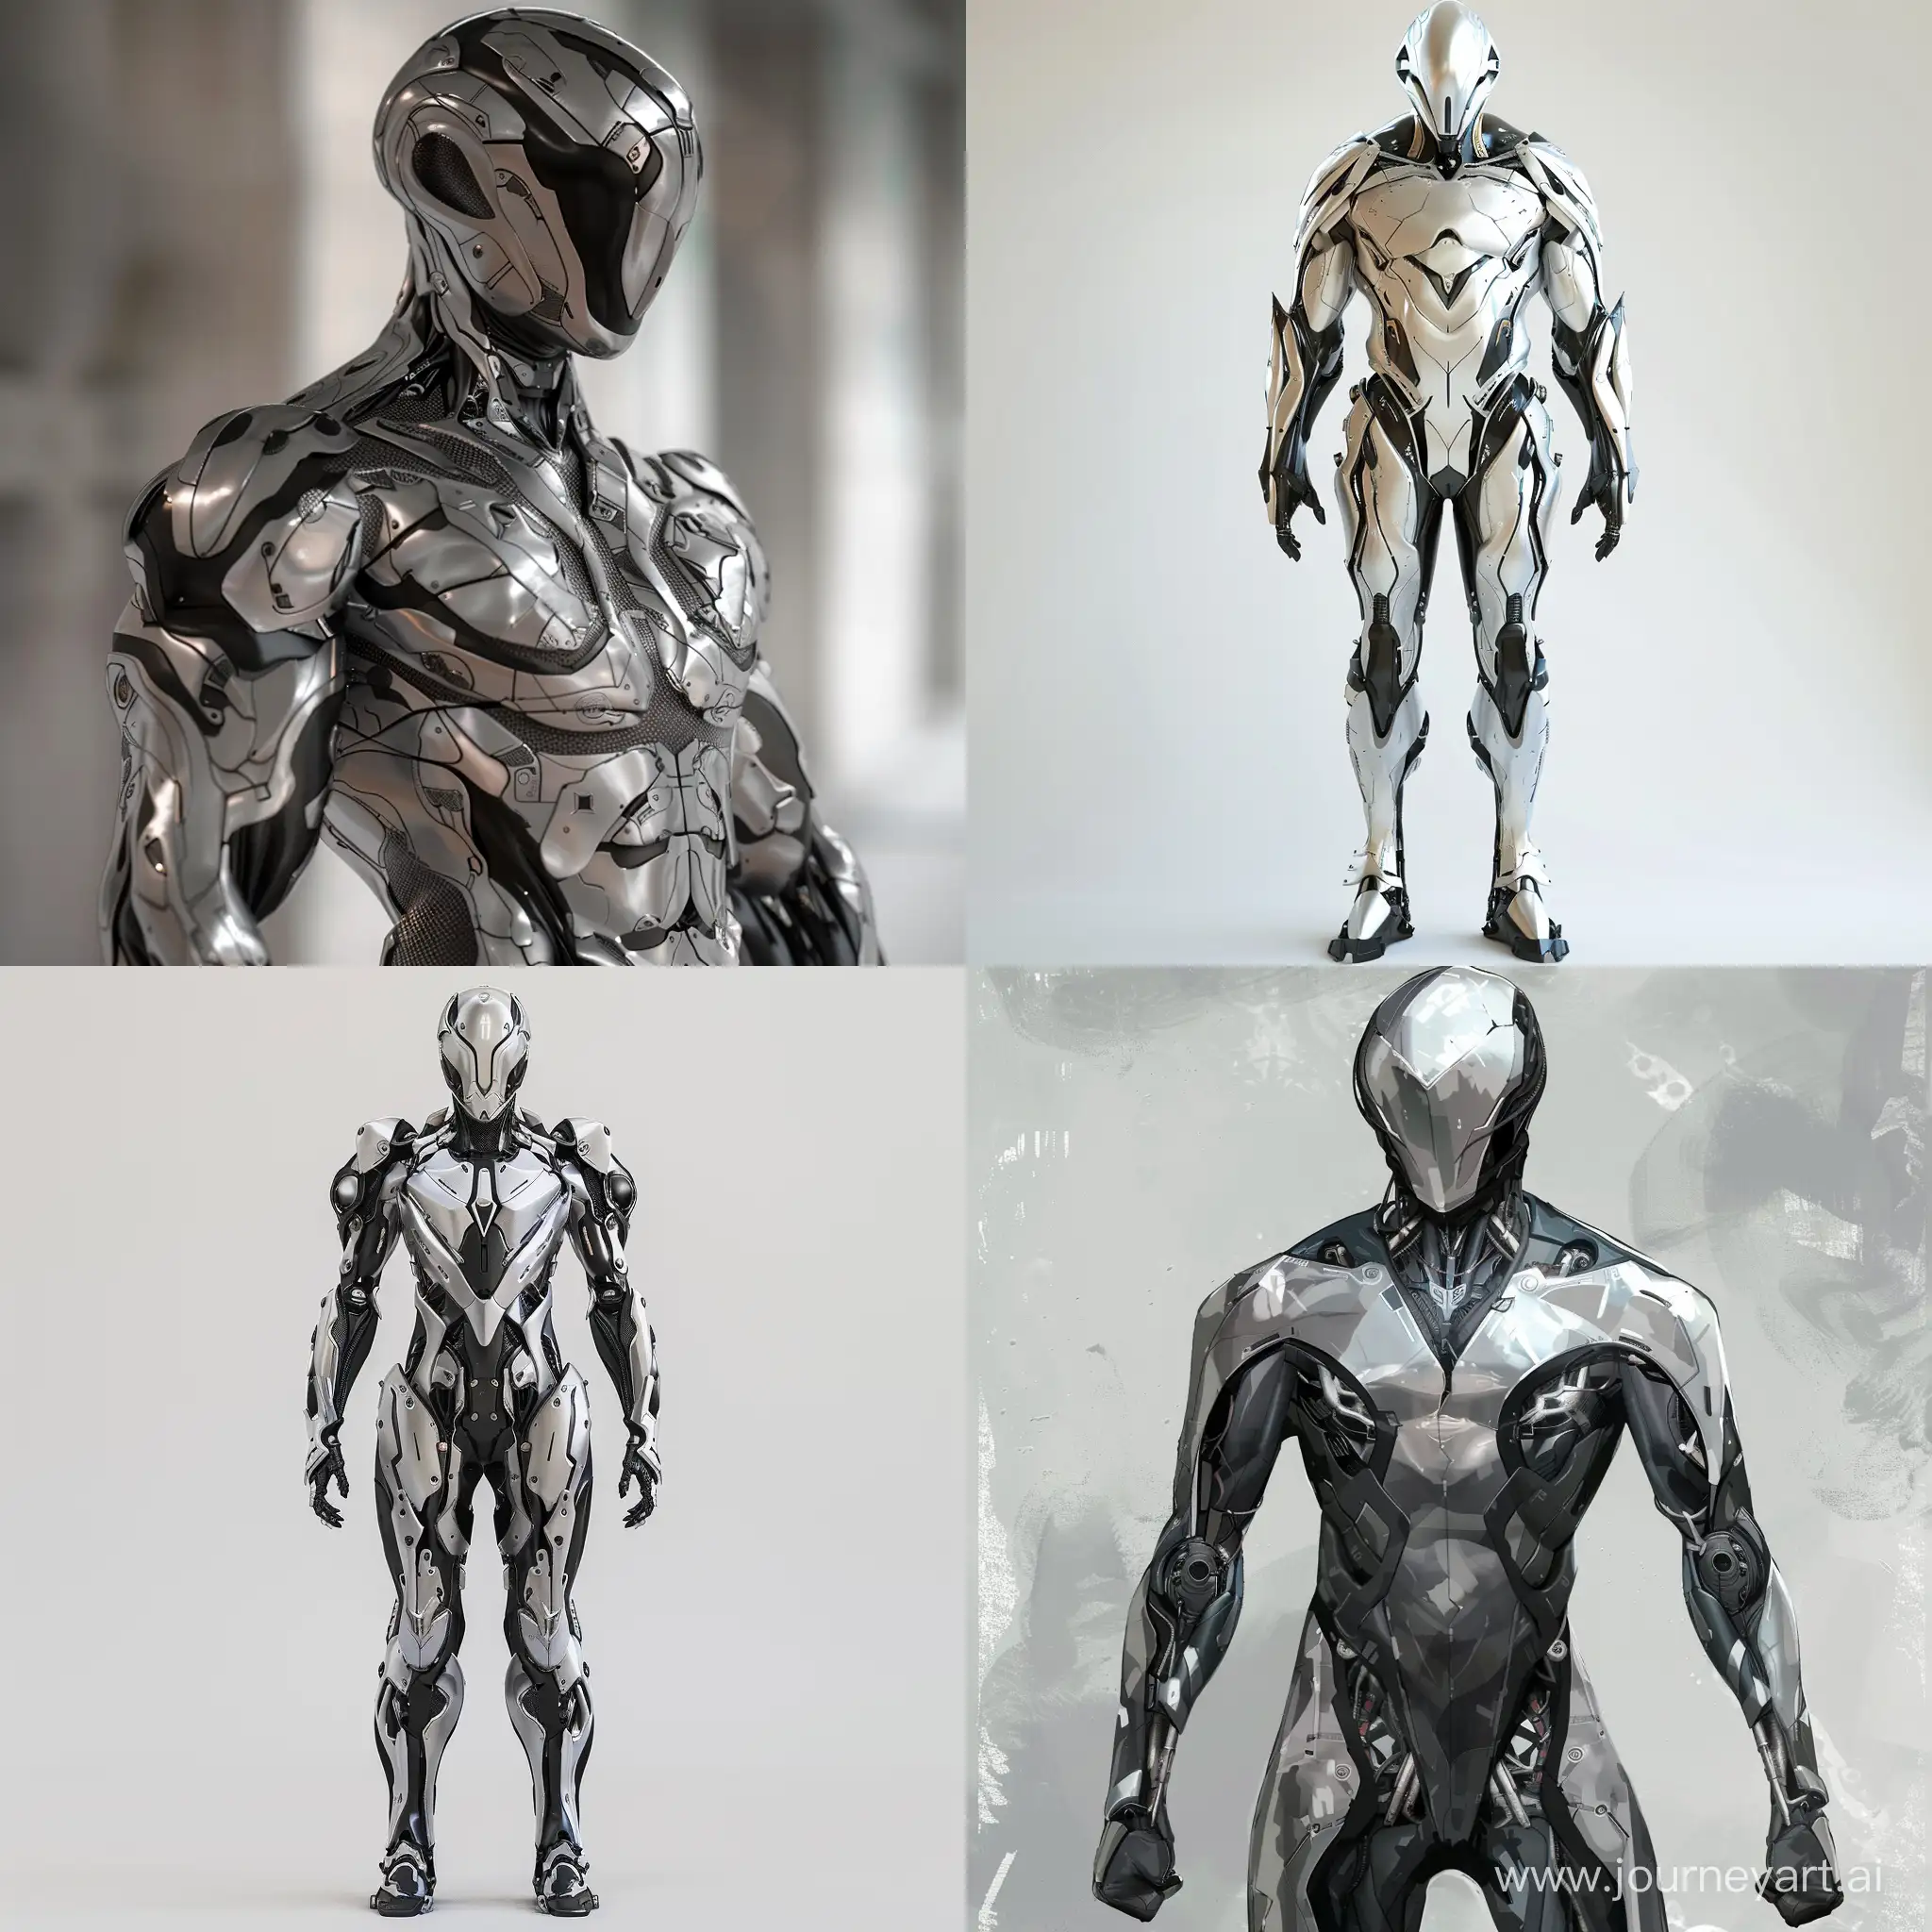 Sleek-AnimeStyle-Male-Exoskeleton-Armor-in-Magical-Steampunk-Aesthetics